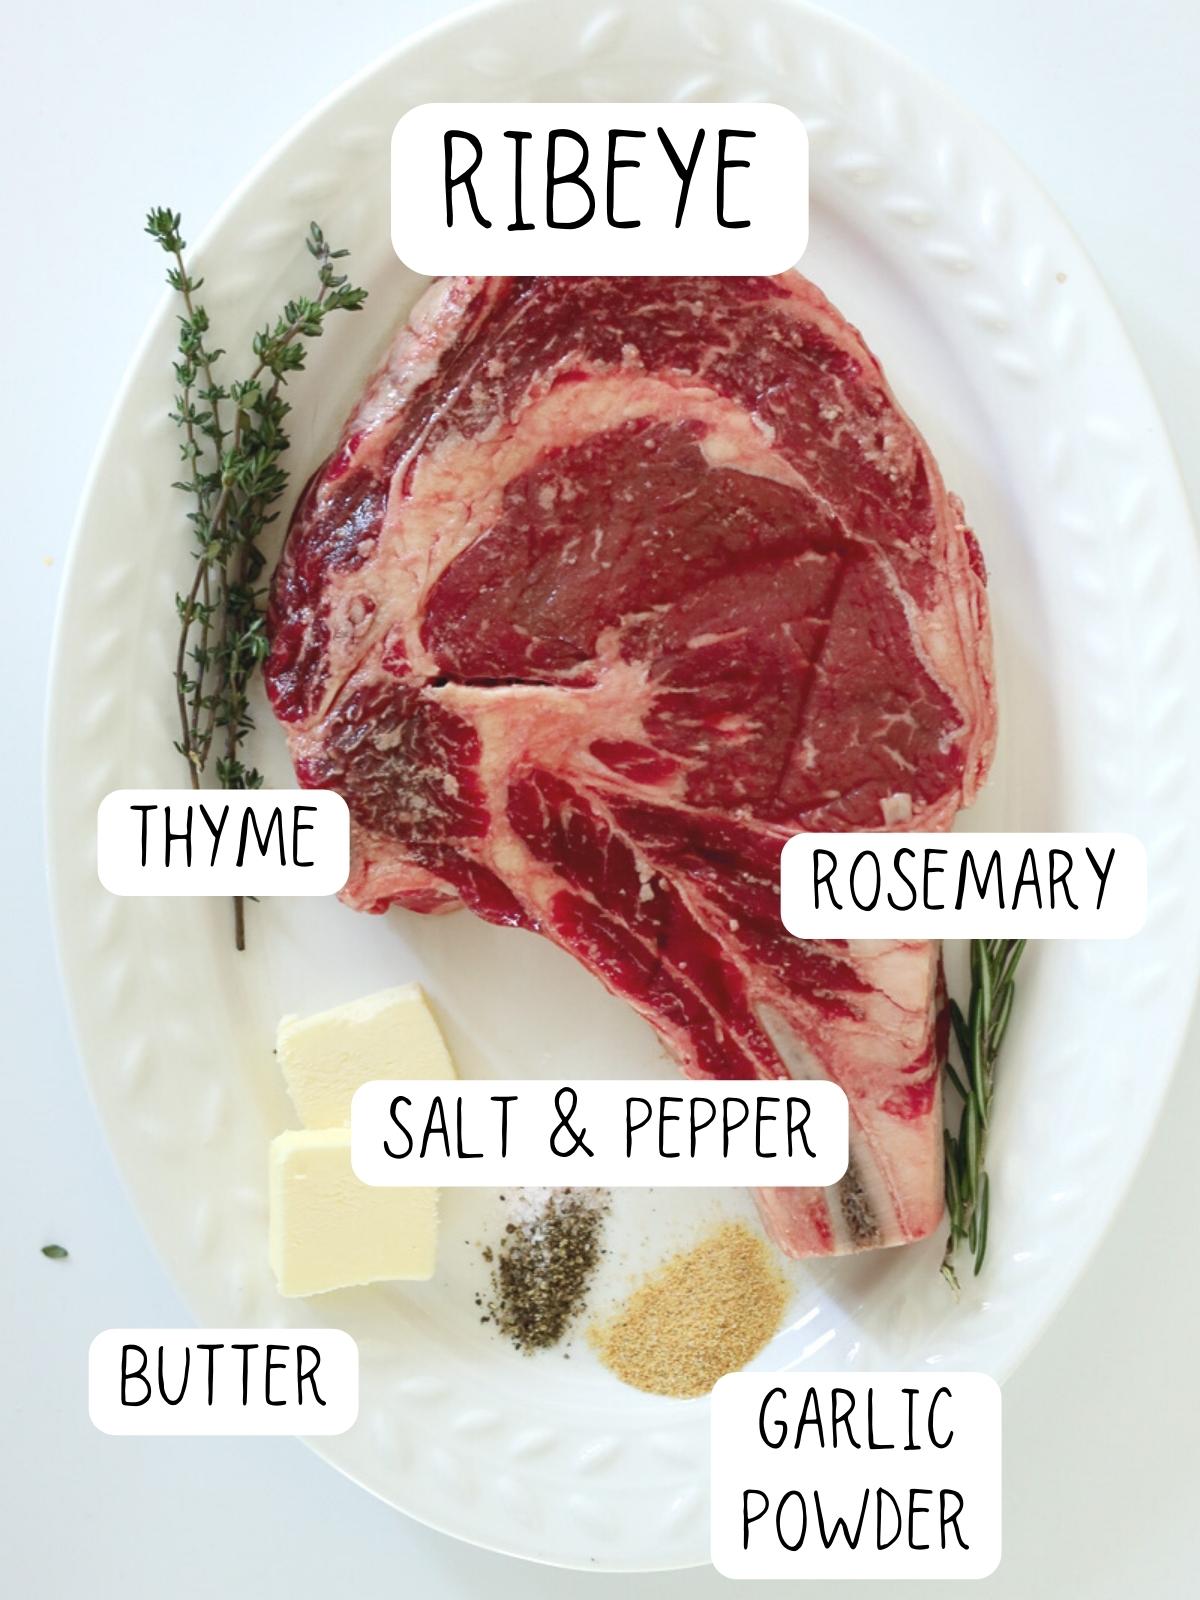 ingredients for air fryer ribeye, including ribeye steak, garlic powder, butter, rosemary and thyme